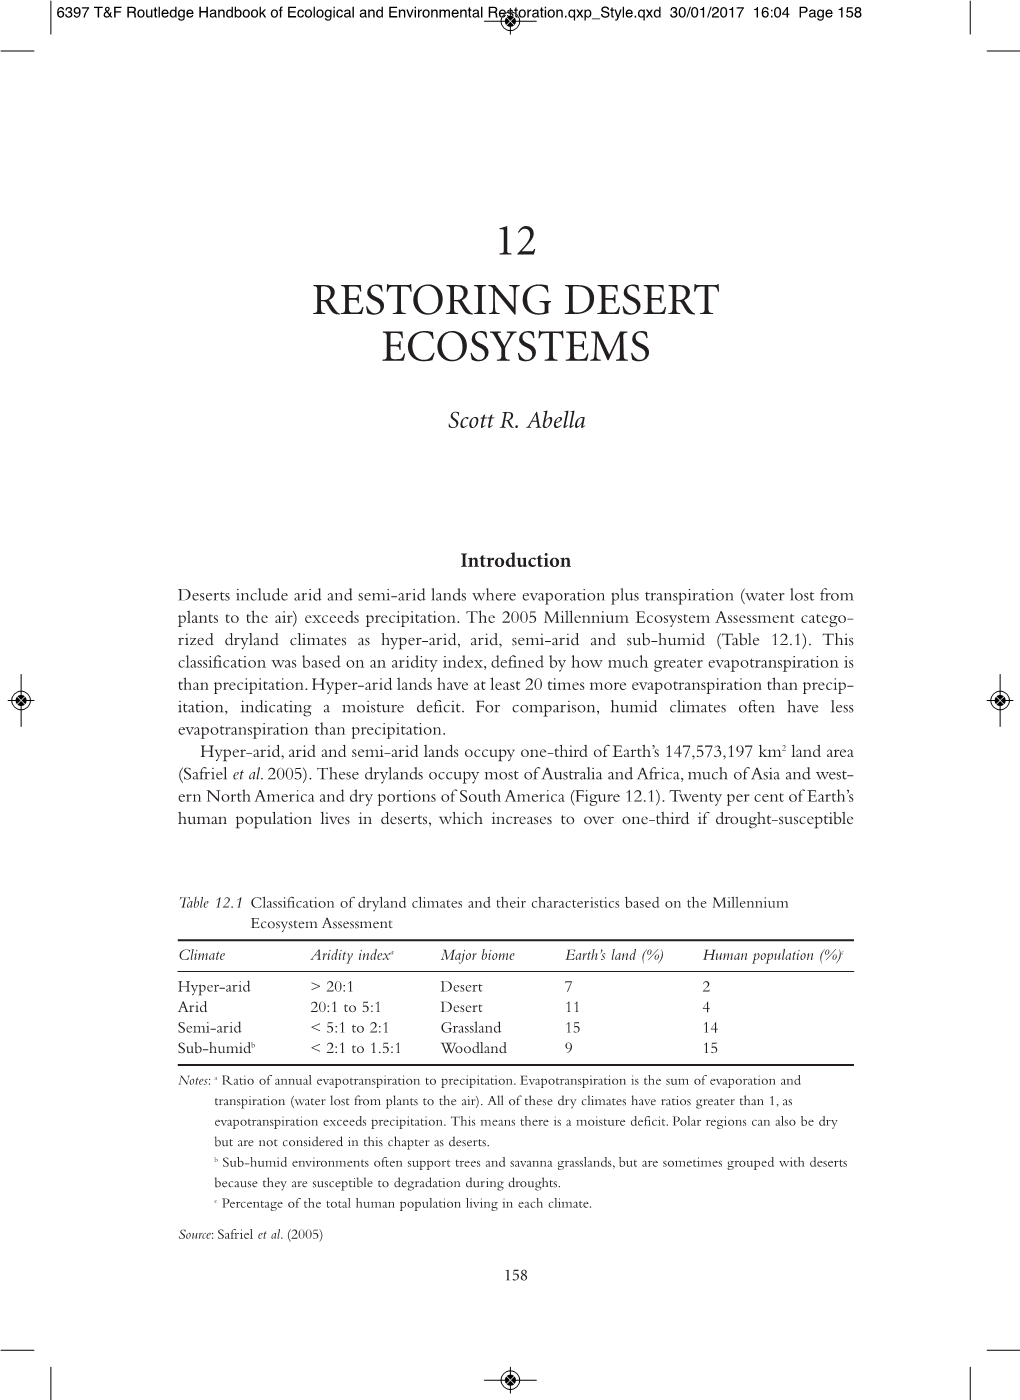 12 Restoring Desert Ecosystems